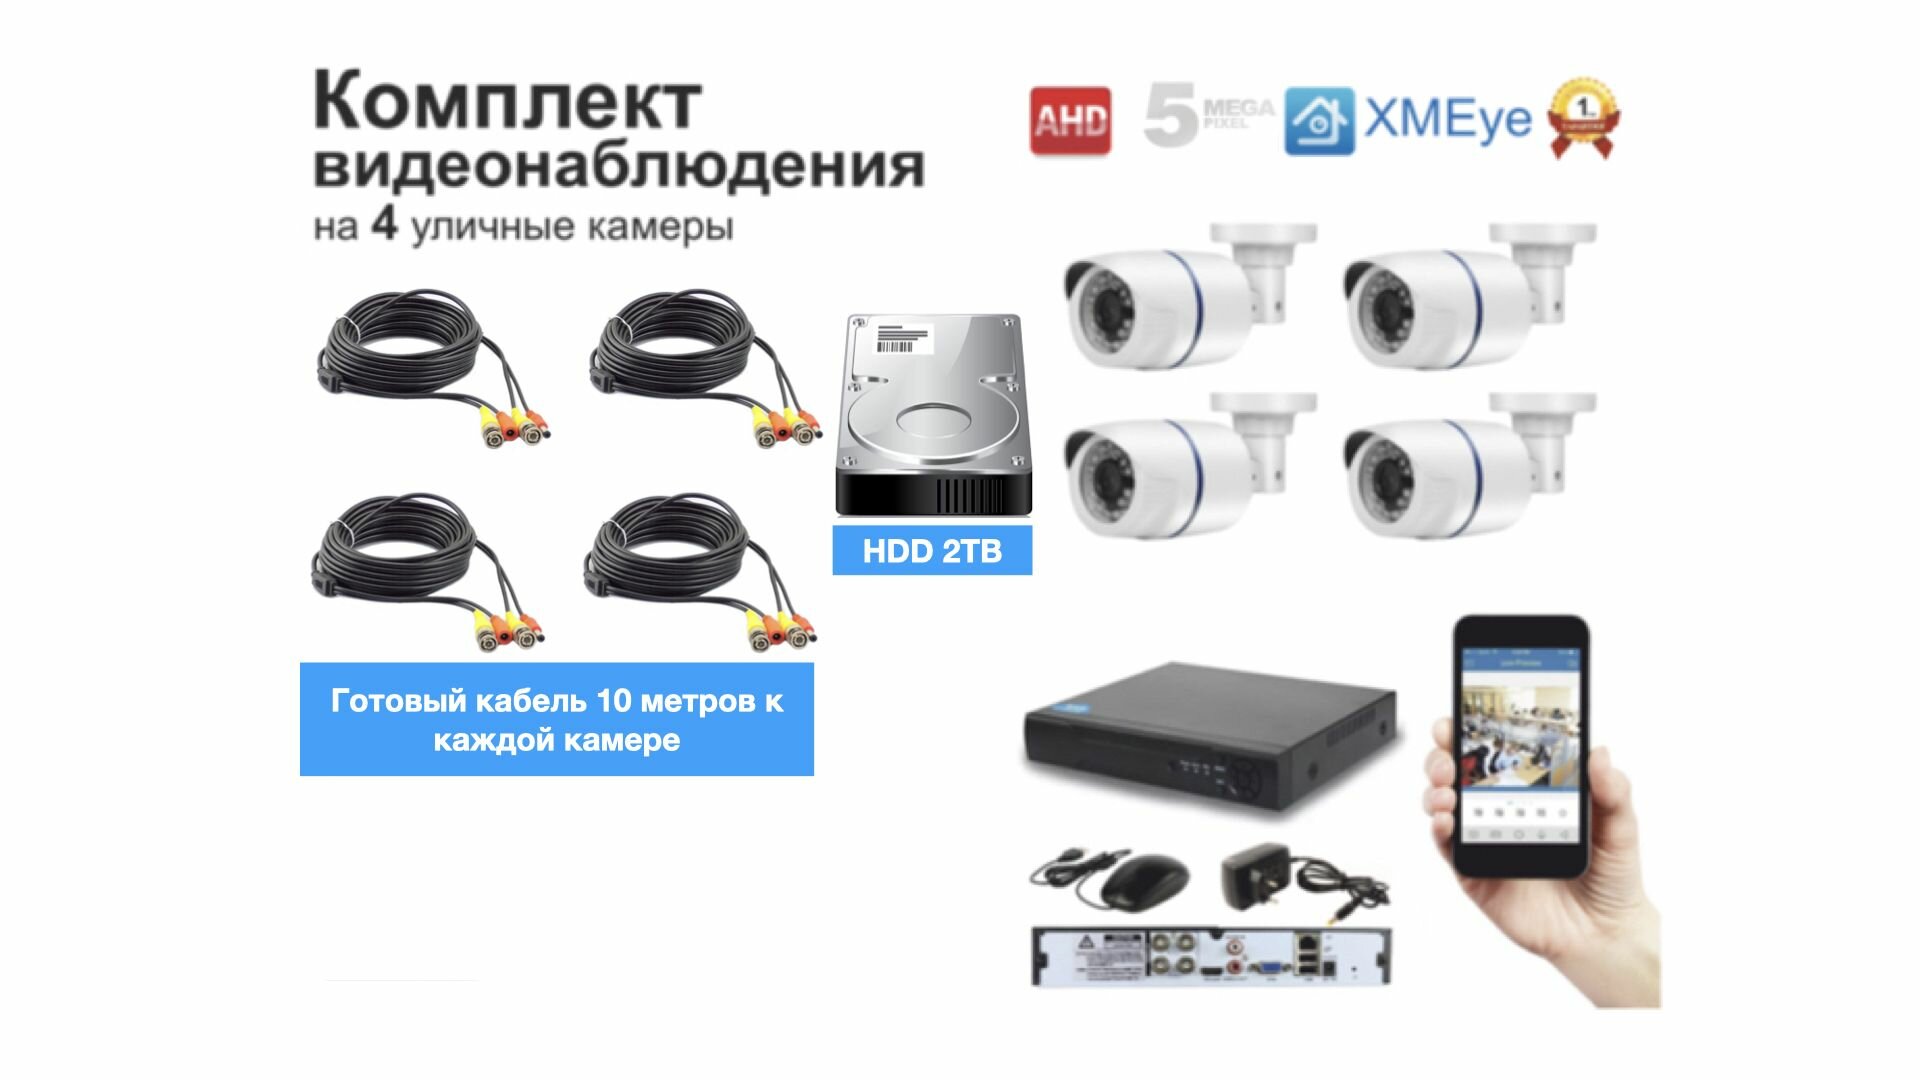 Полный комплект AHD видеонаблюдения на 4 камеры 5мП (KIT4AHD100W5MP_HDD2TB)